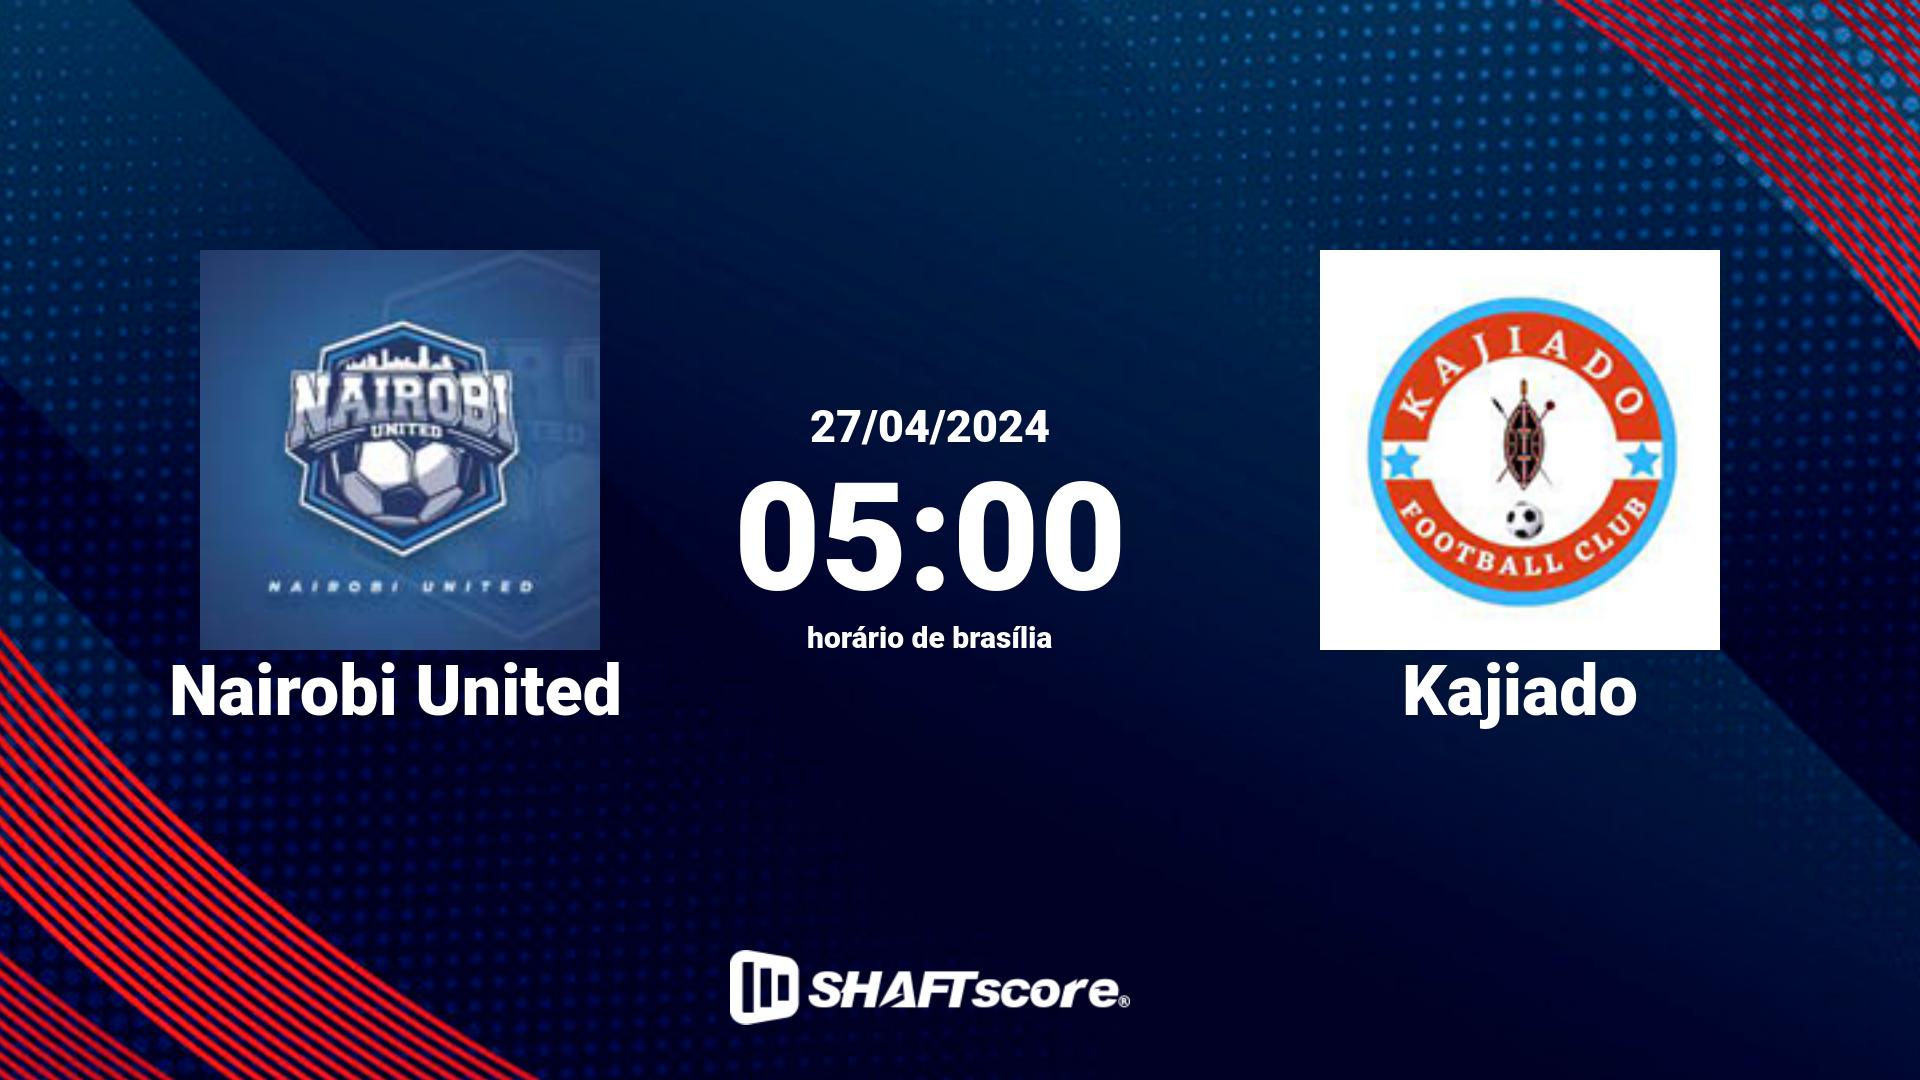 Estatísticas do jogo Nairobi United vs Kajiado 27.04 05:00